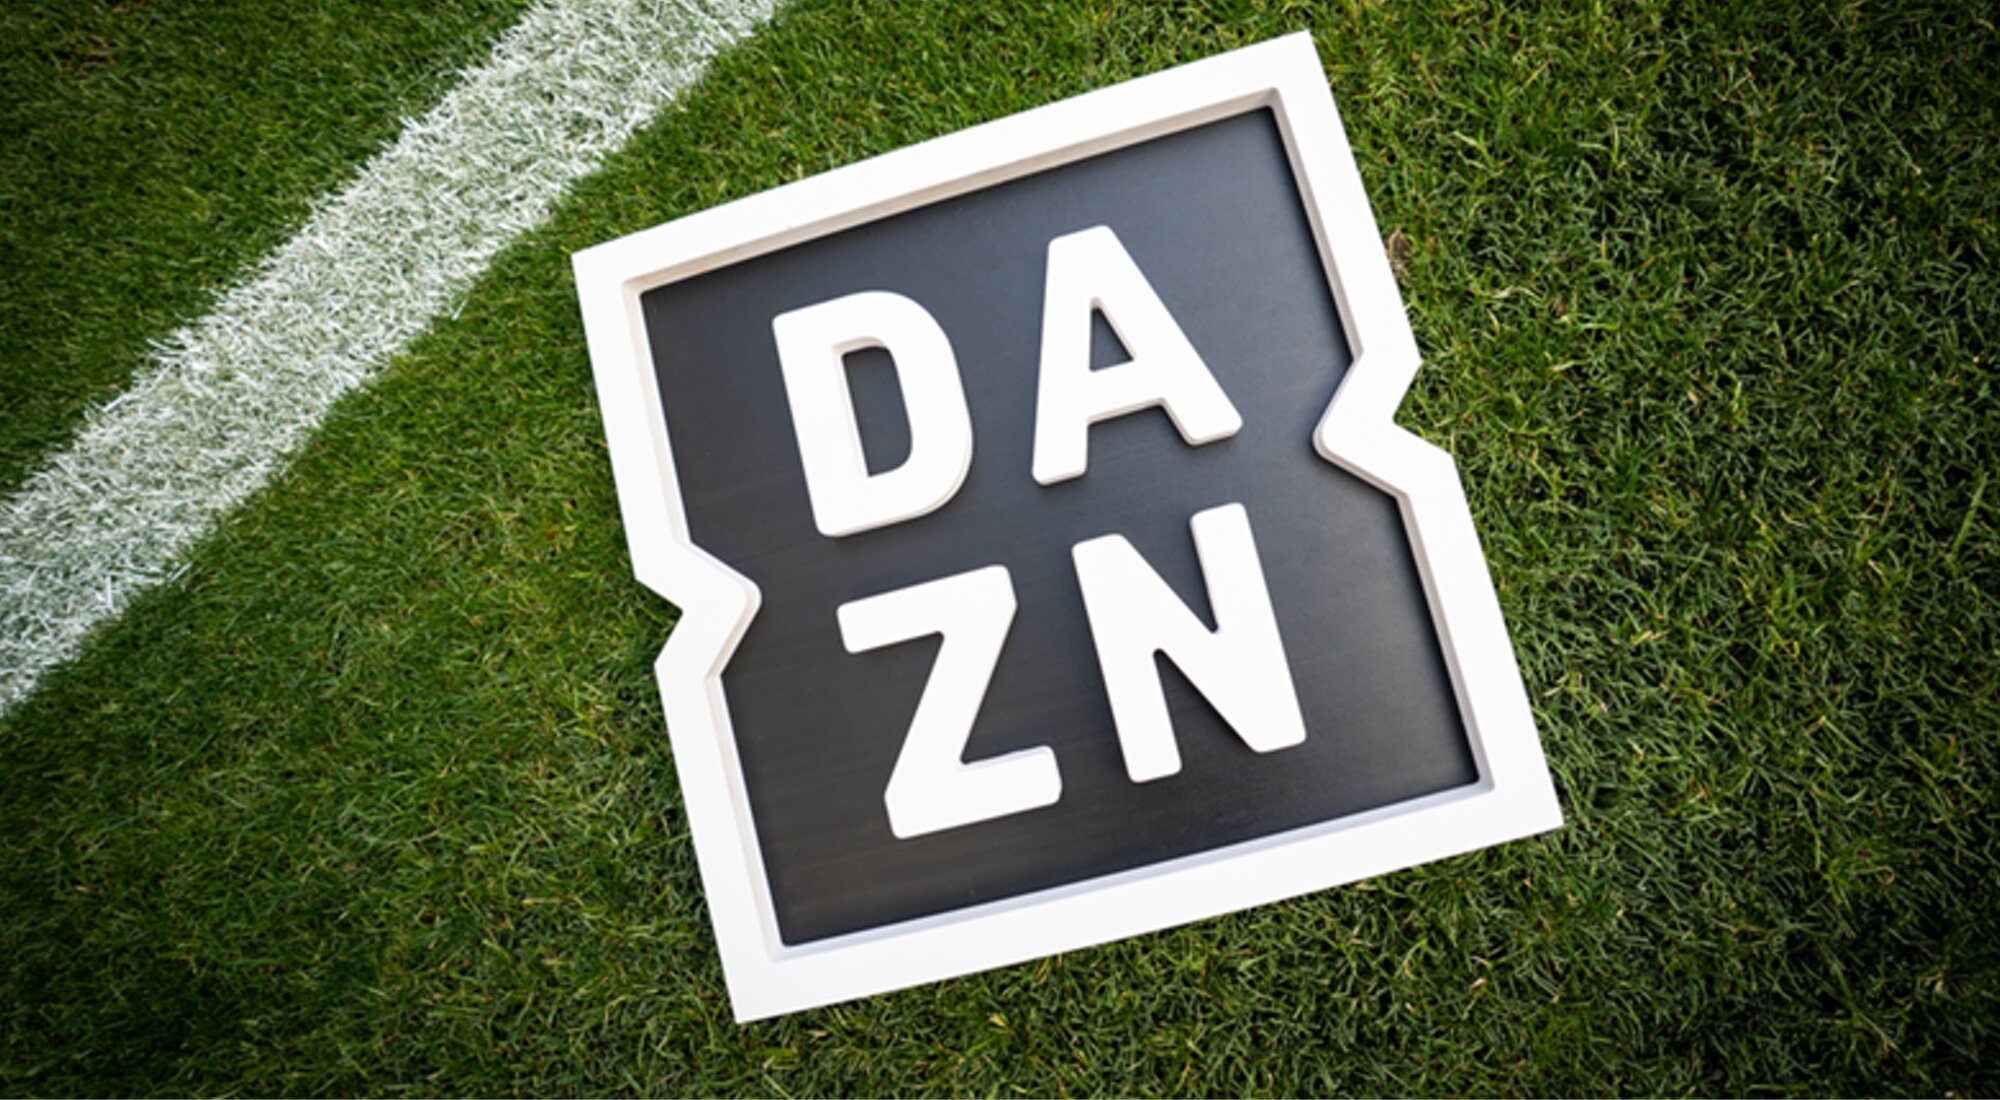 Logo de DAZN